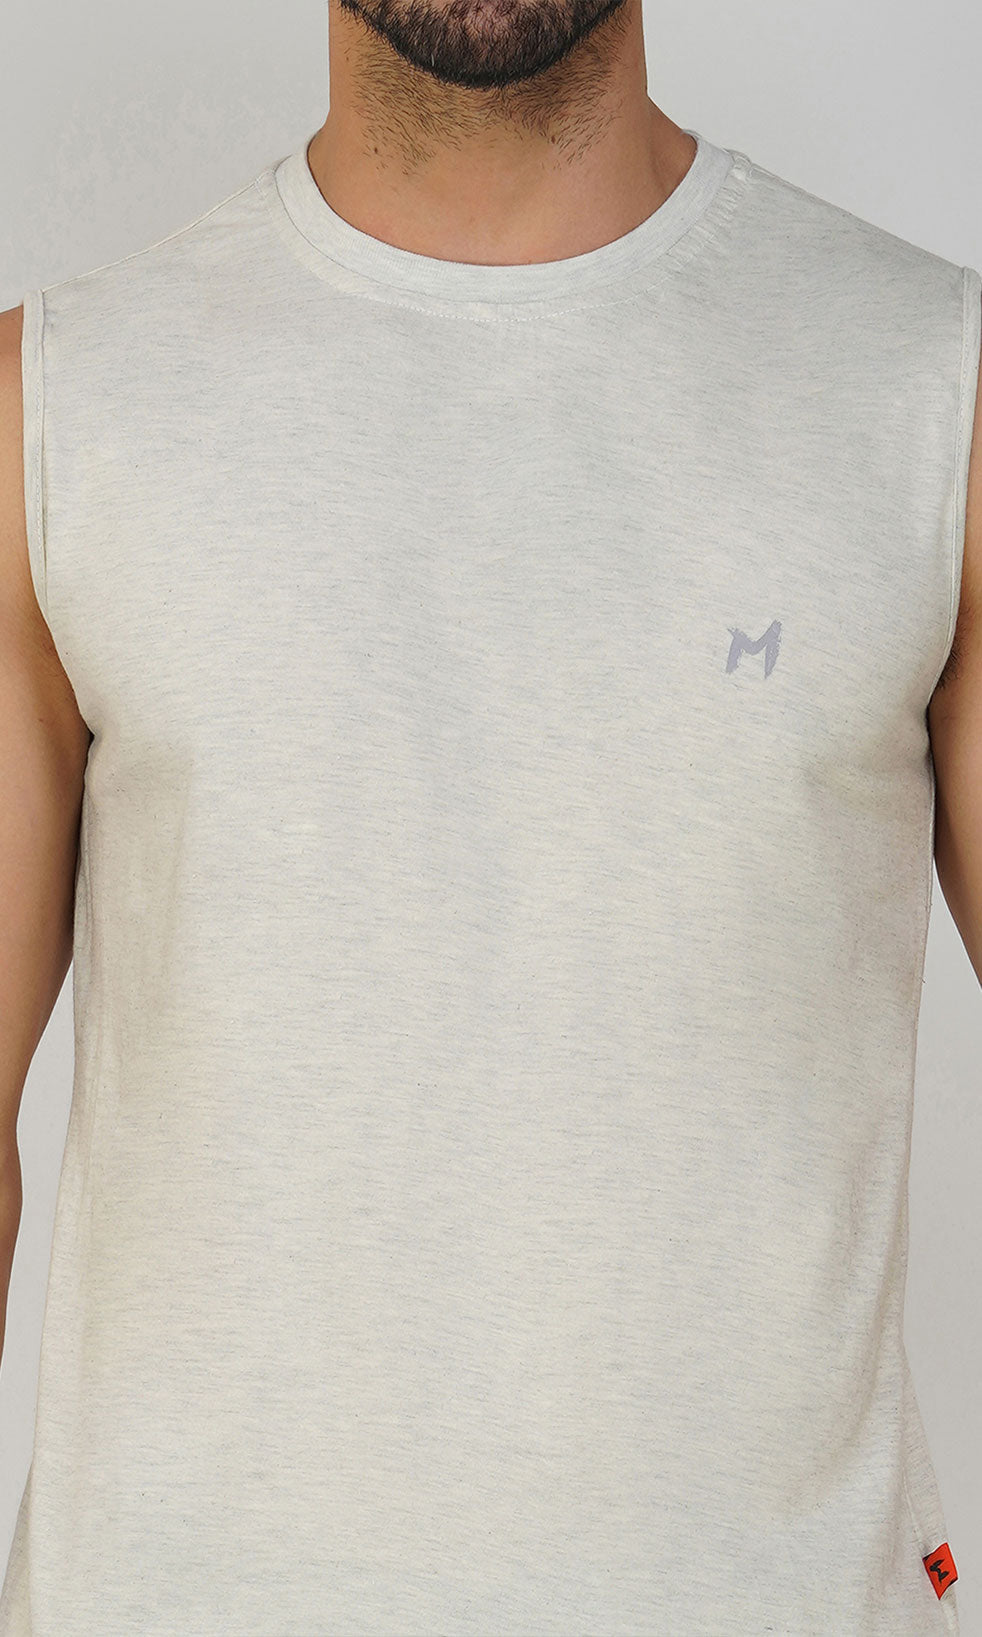 Mebadass Cotton Men's Sleeveless Regular Size Vests - Light Grey